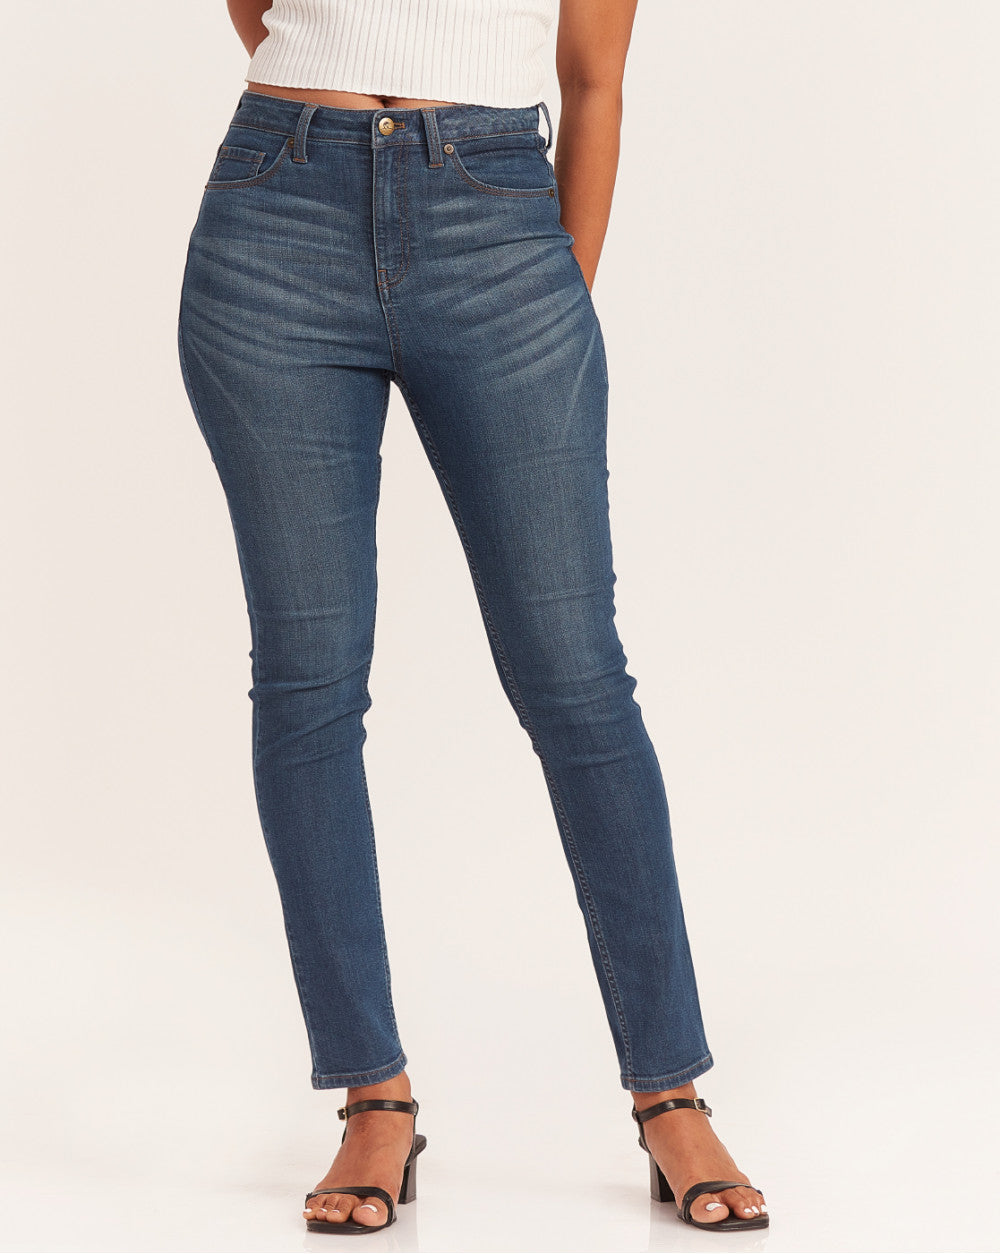 Skinny Fit Waist Jeans - Classic Blue